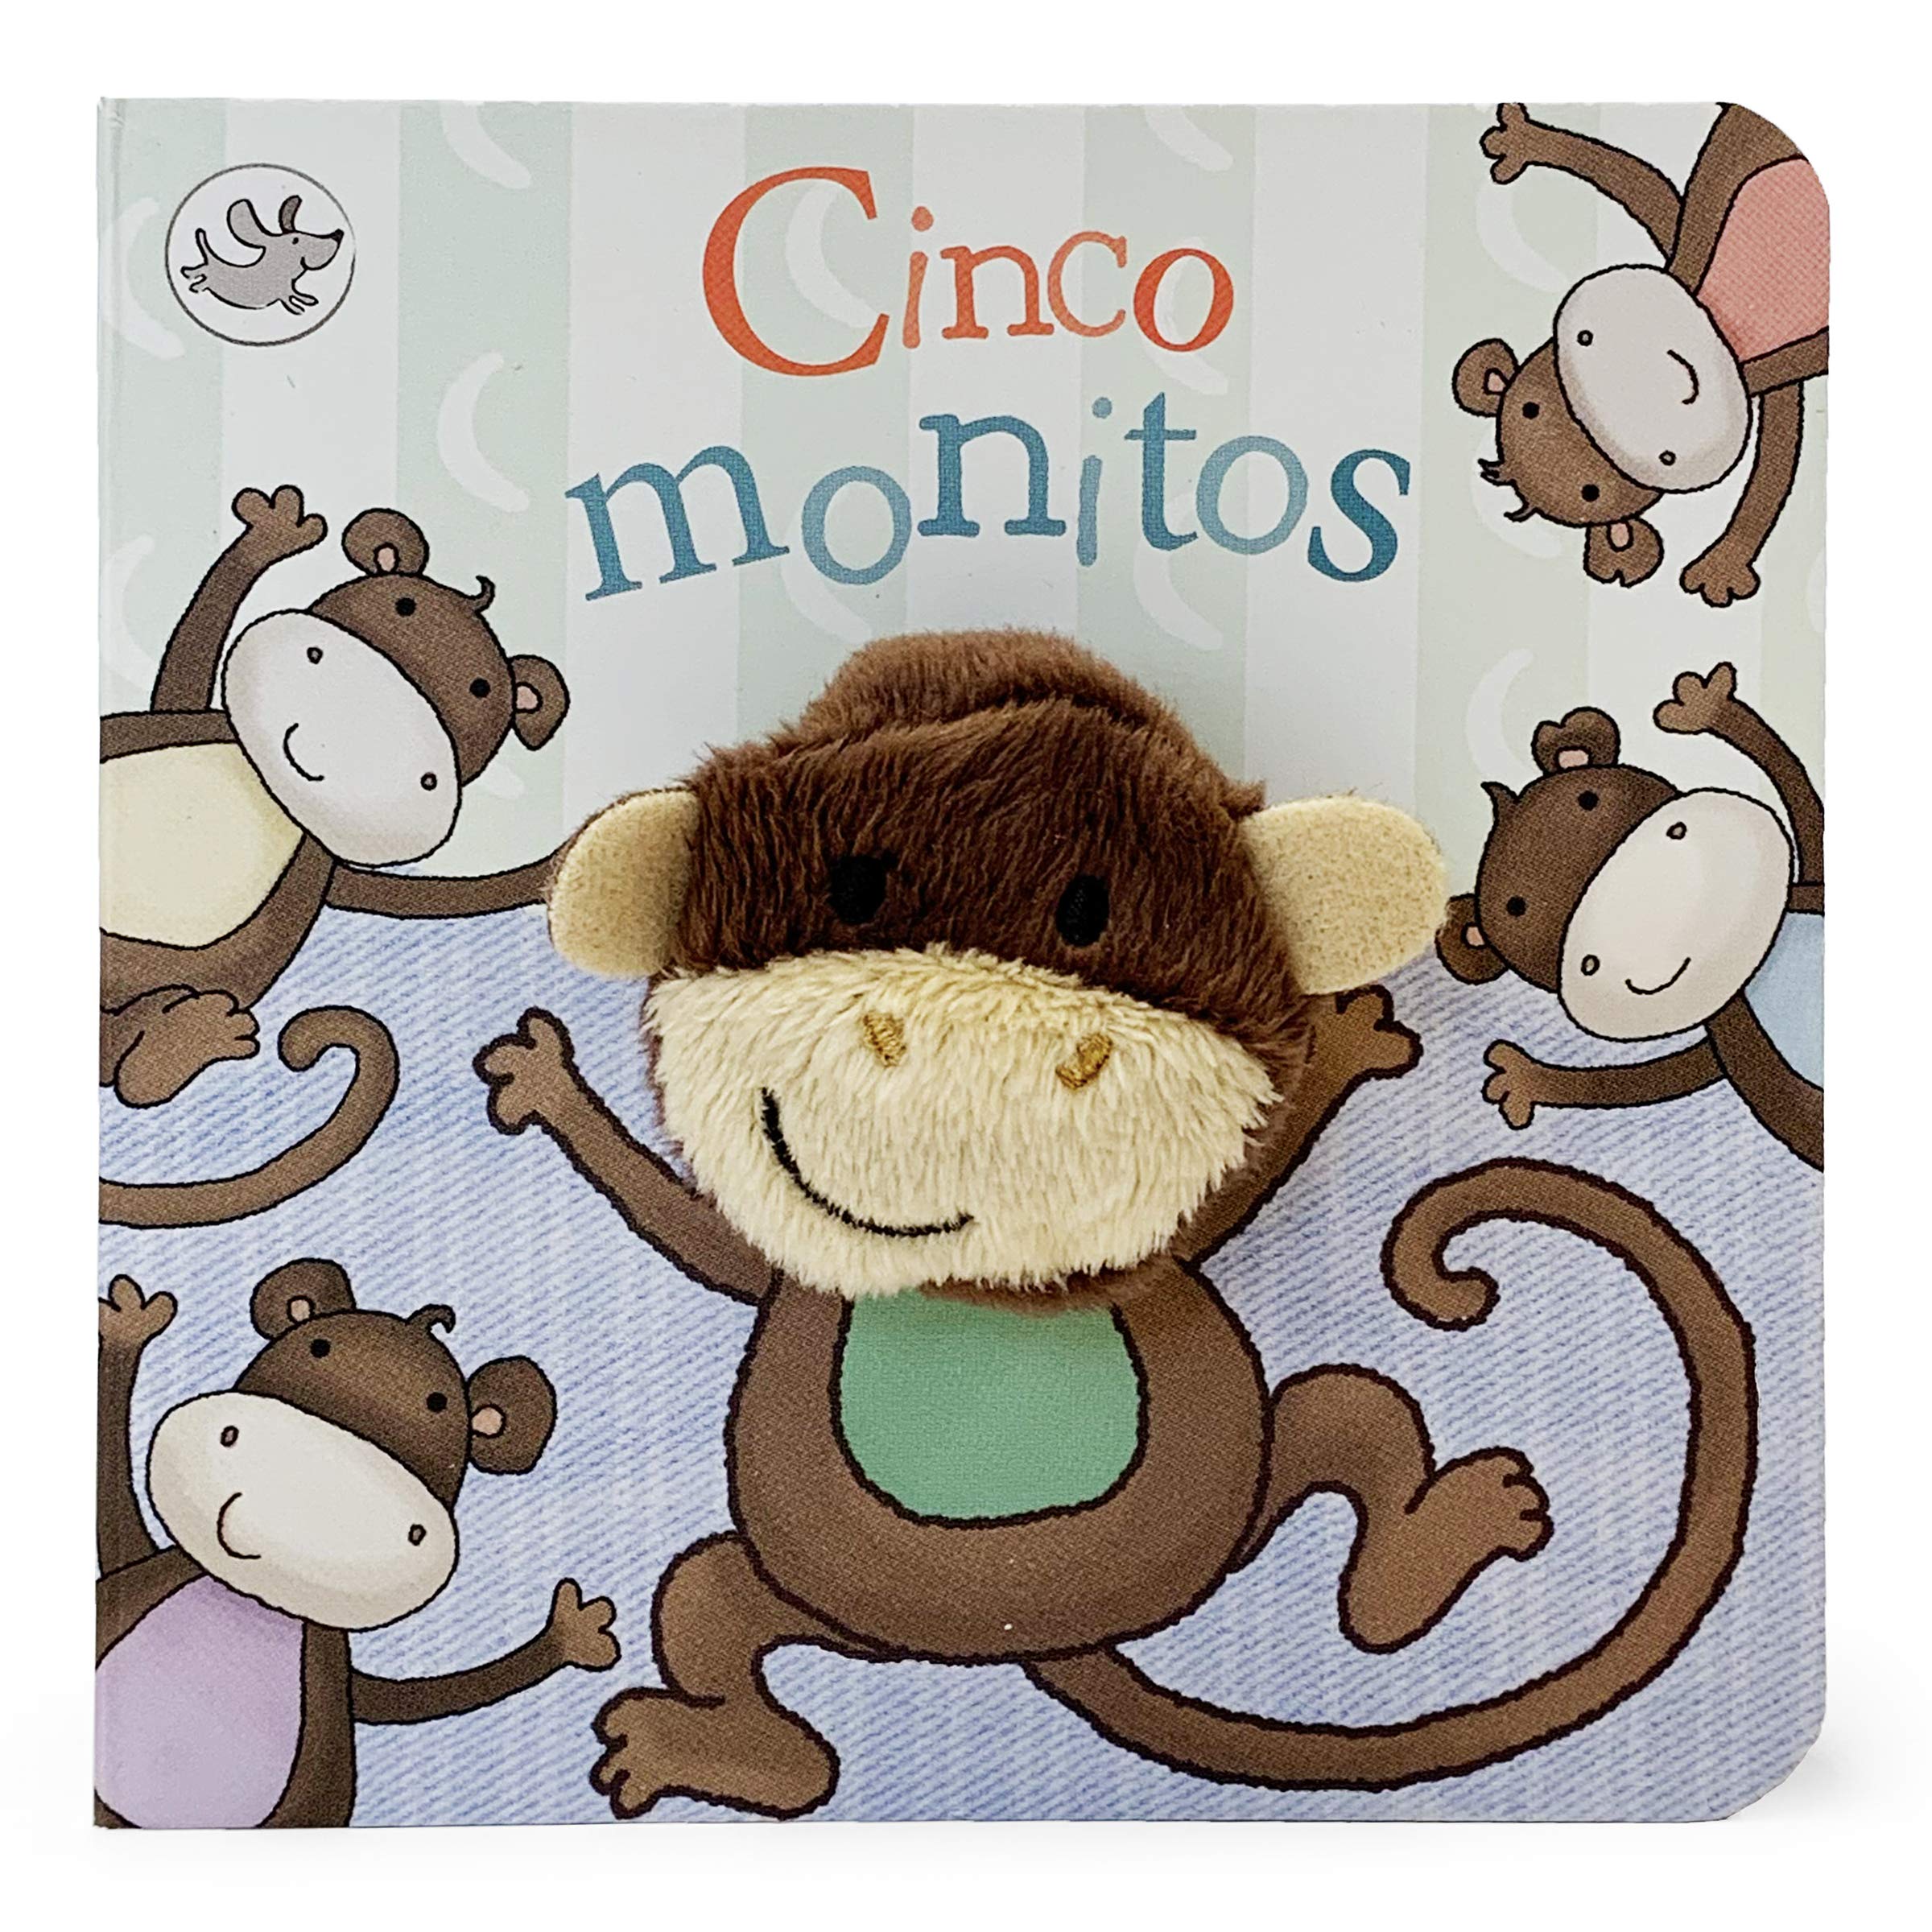 Cinco monitos / Five Little Monkeys (Finger Puppet Book) (Spanish Edition)